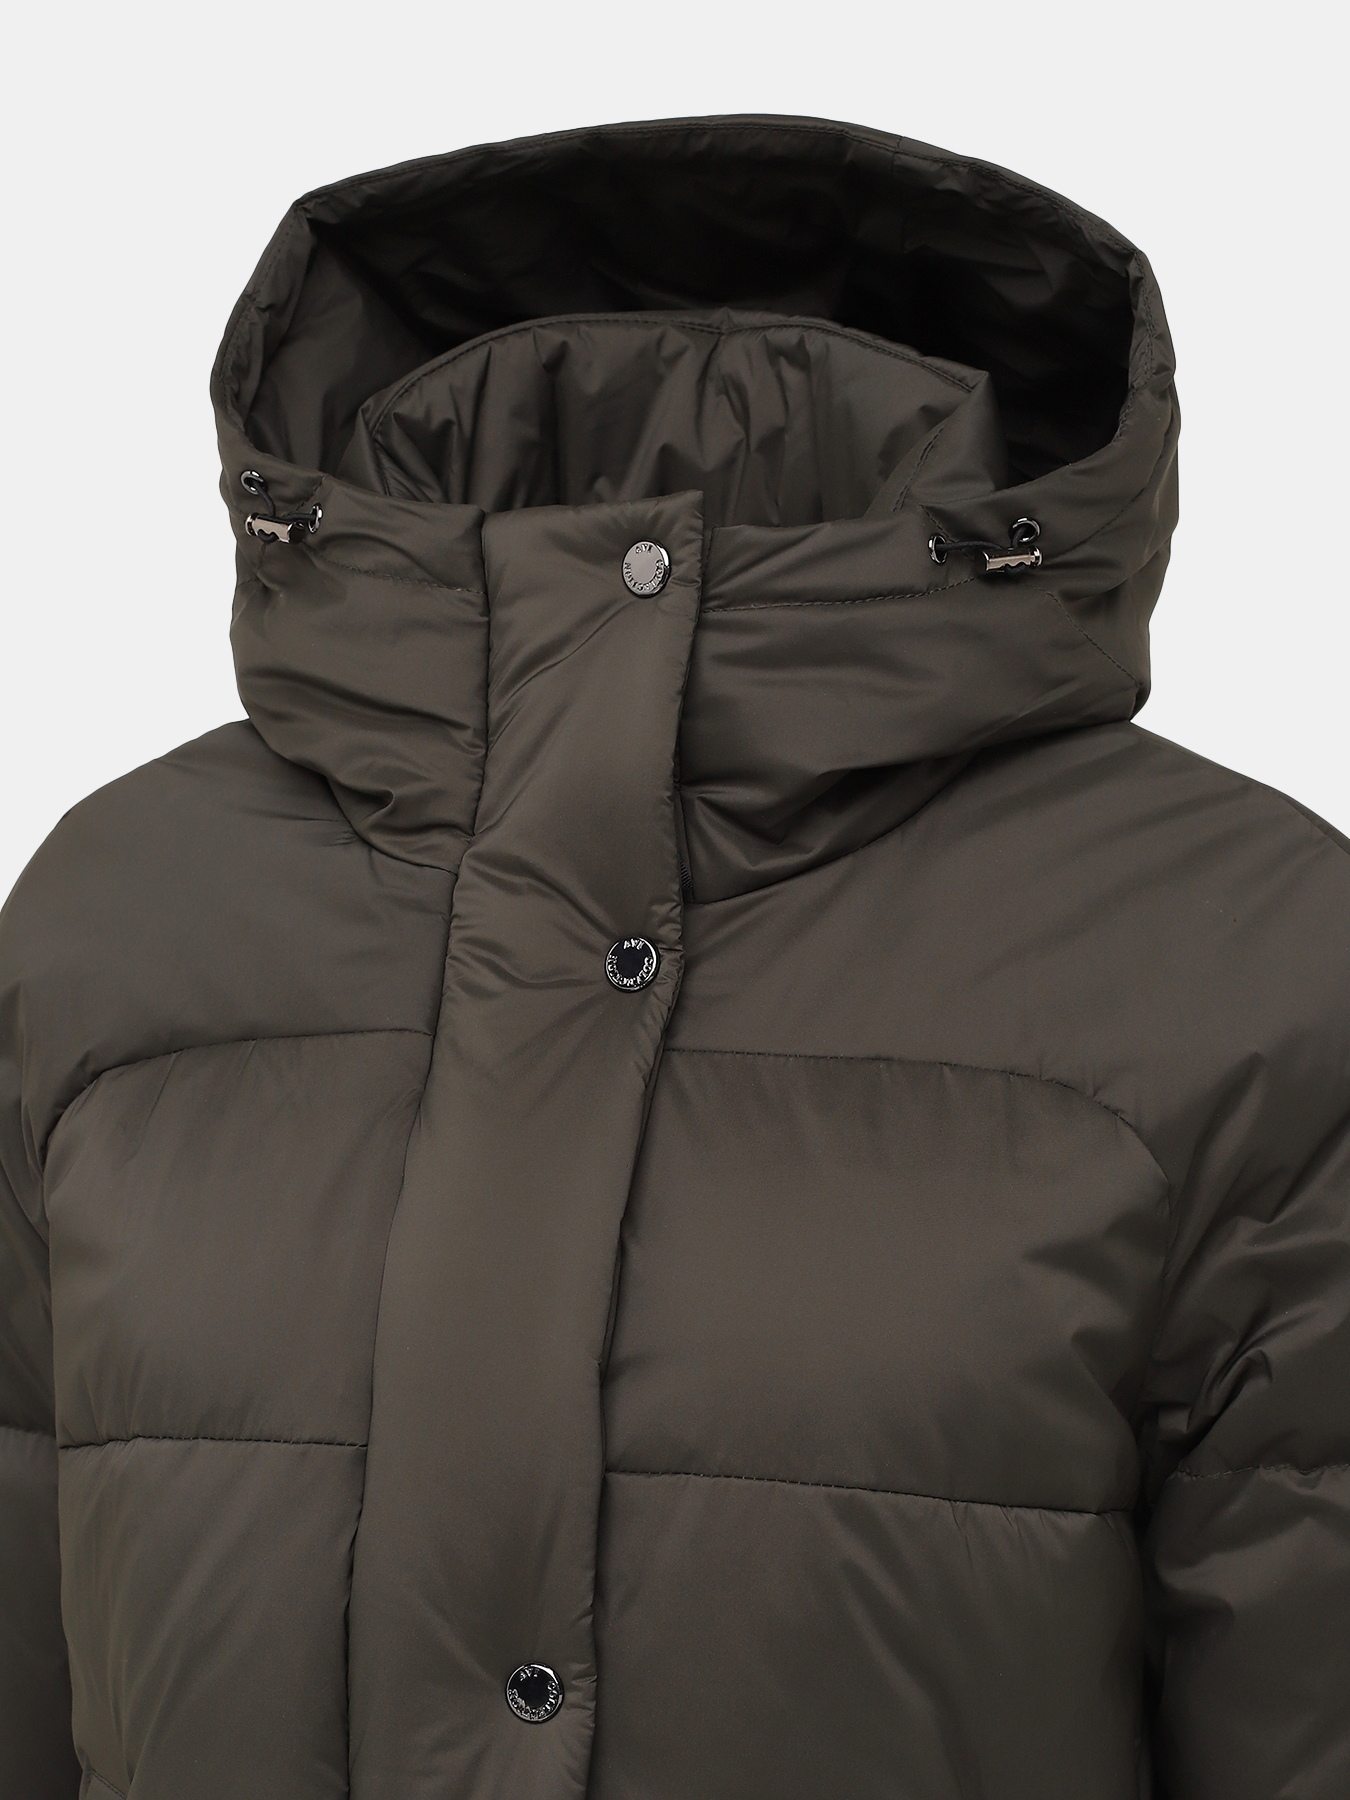 Пальто зимнее AVI 433638-022, цвет хаки, размер 48 - фото 2